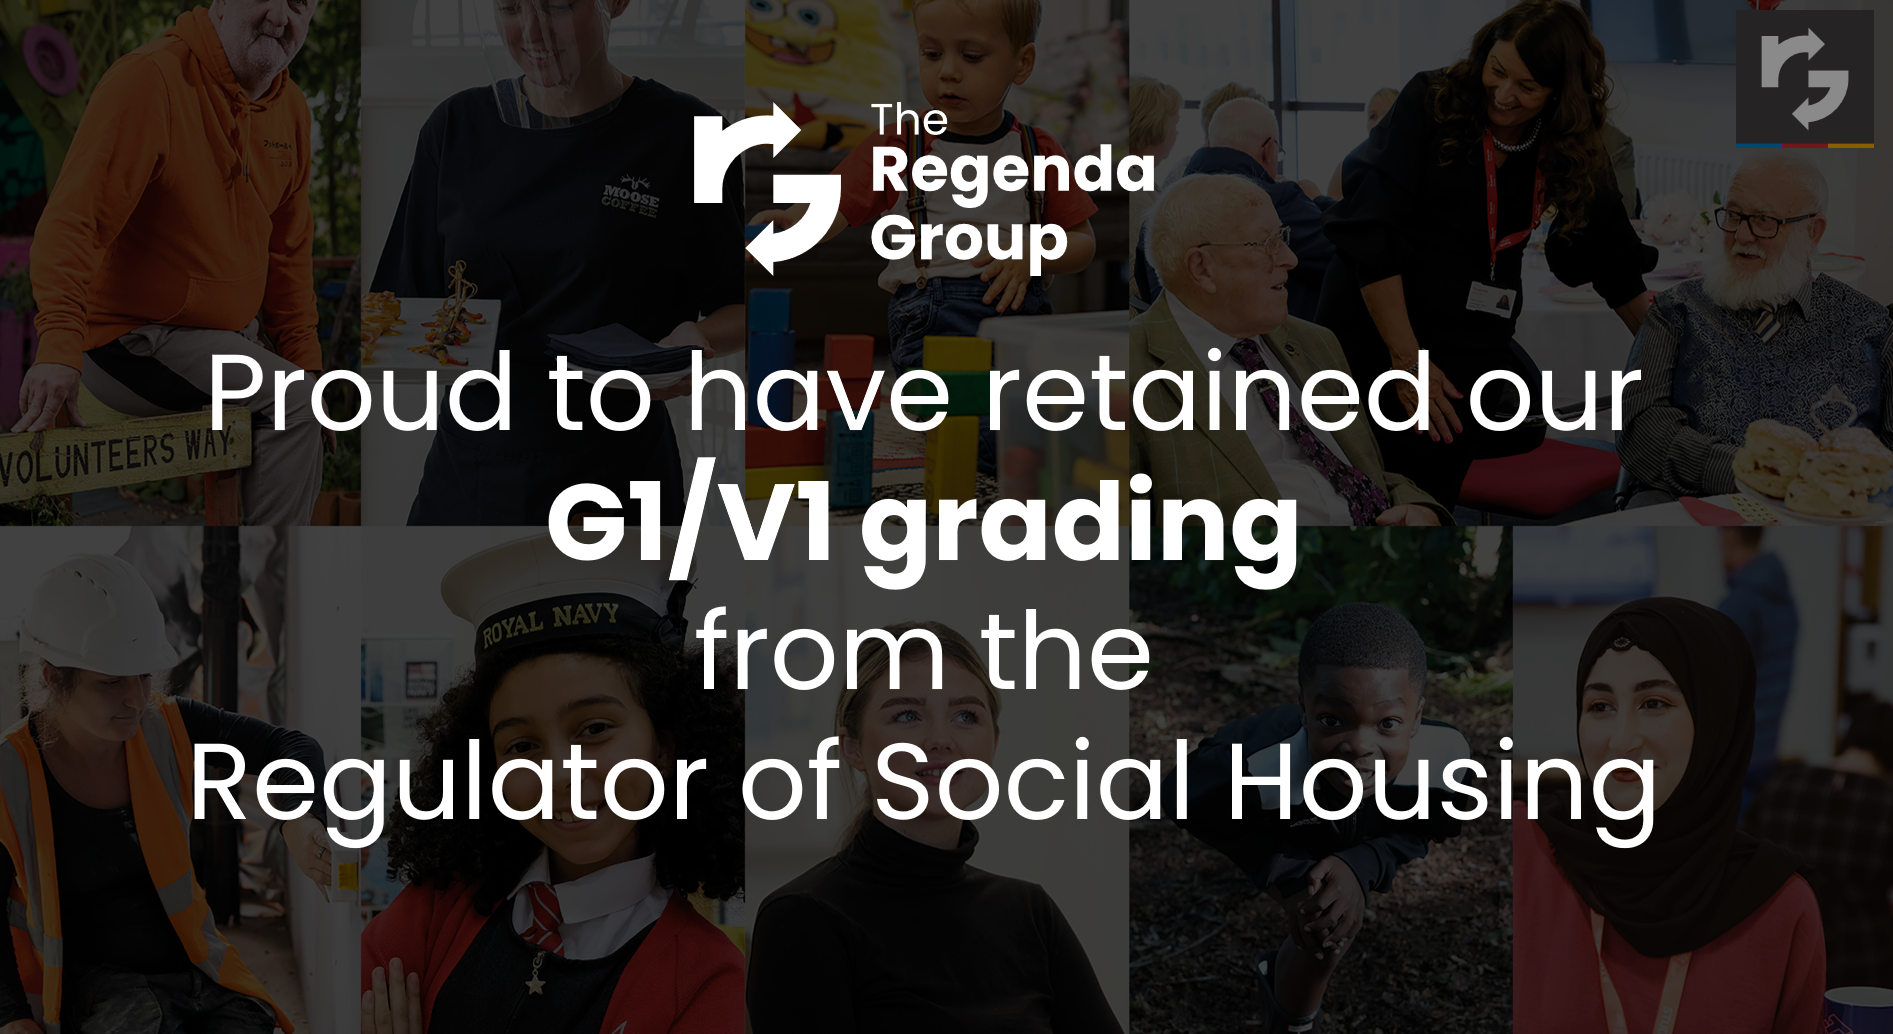 Image showing Regenda regulatory grading as G1/V1